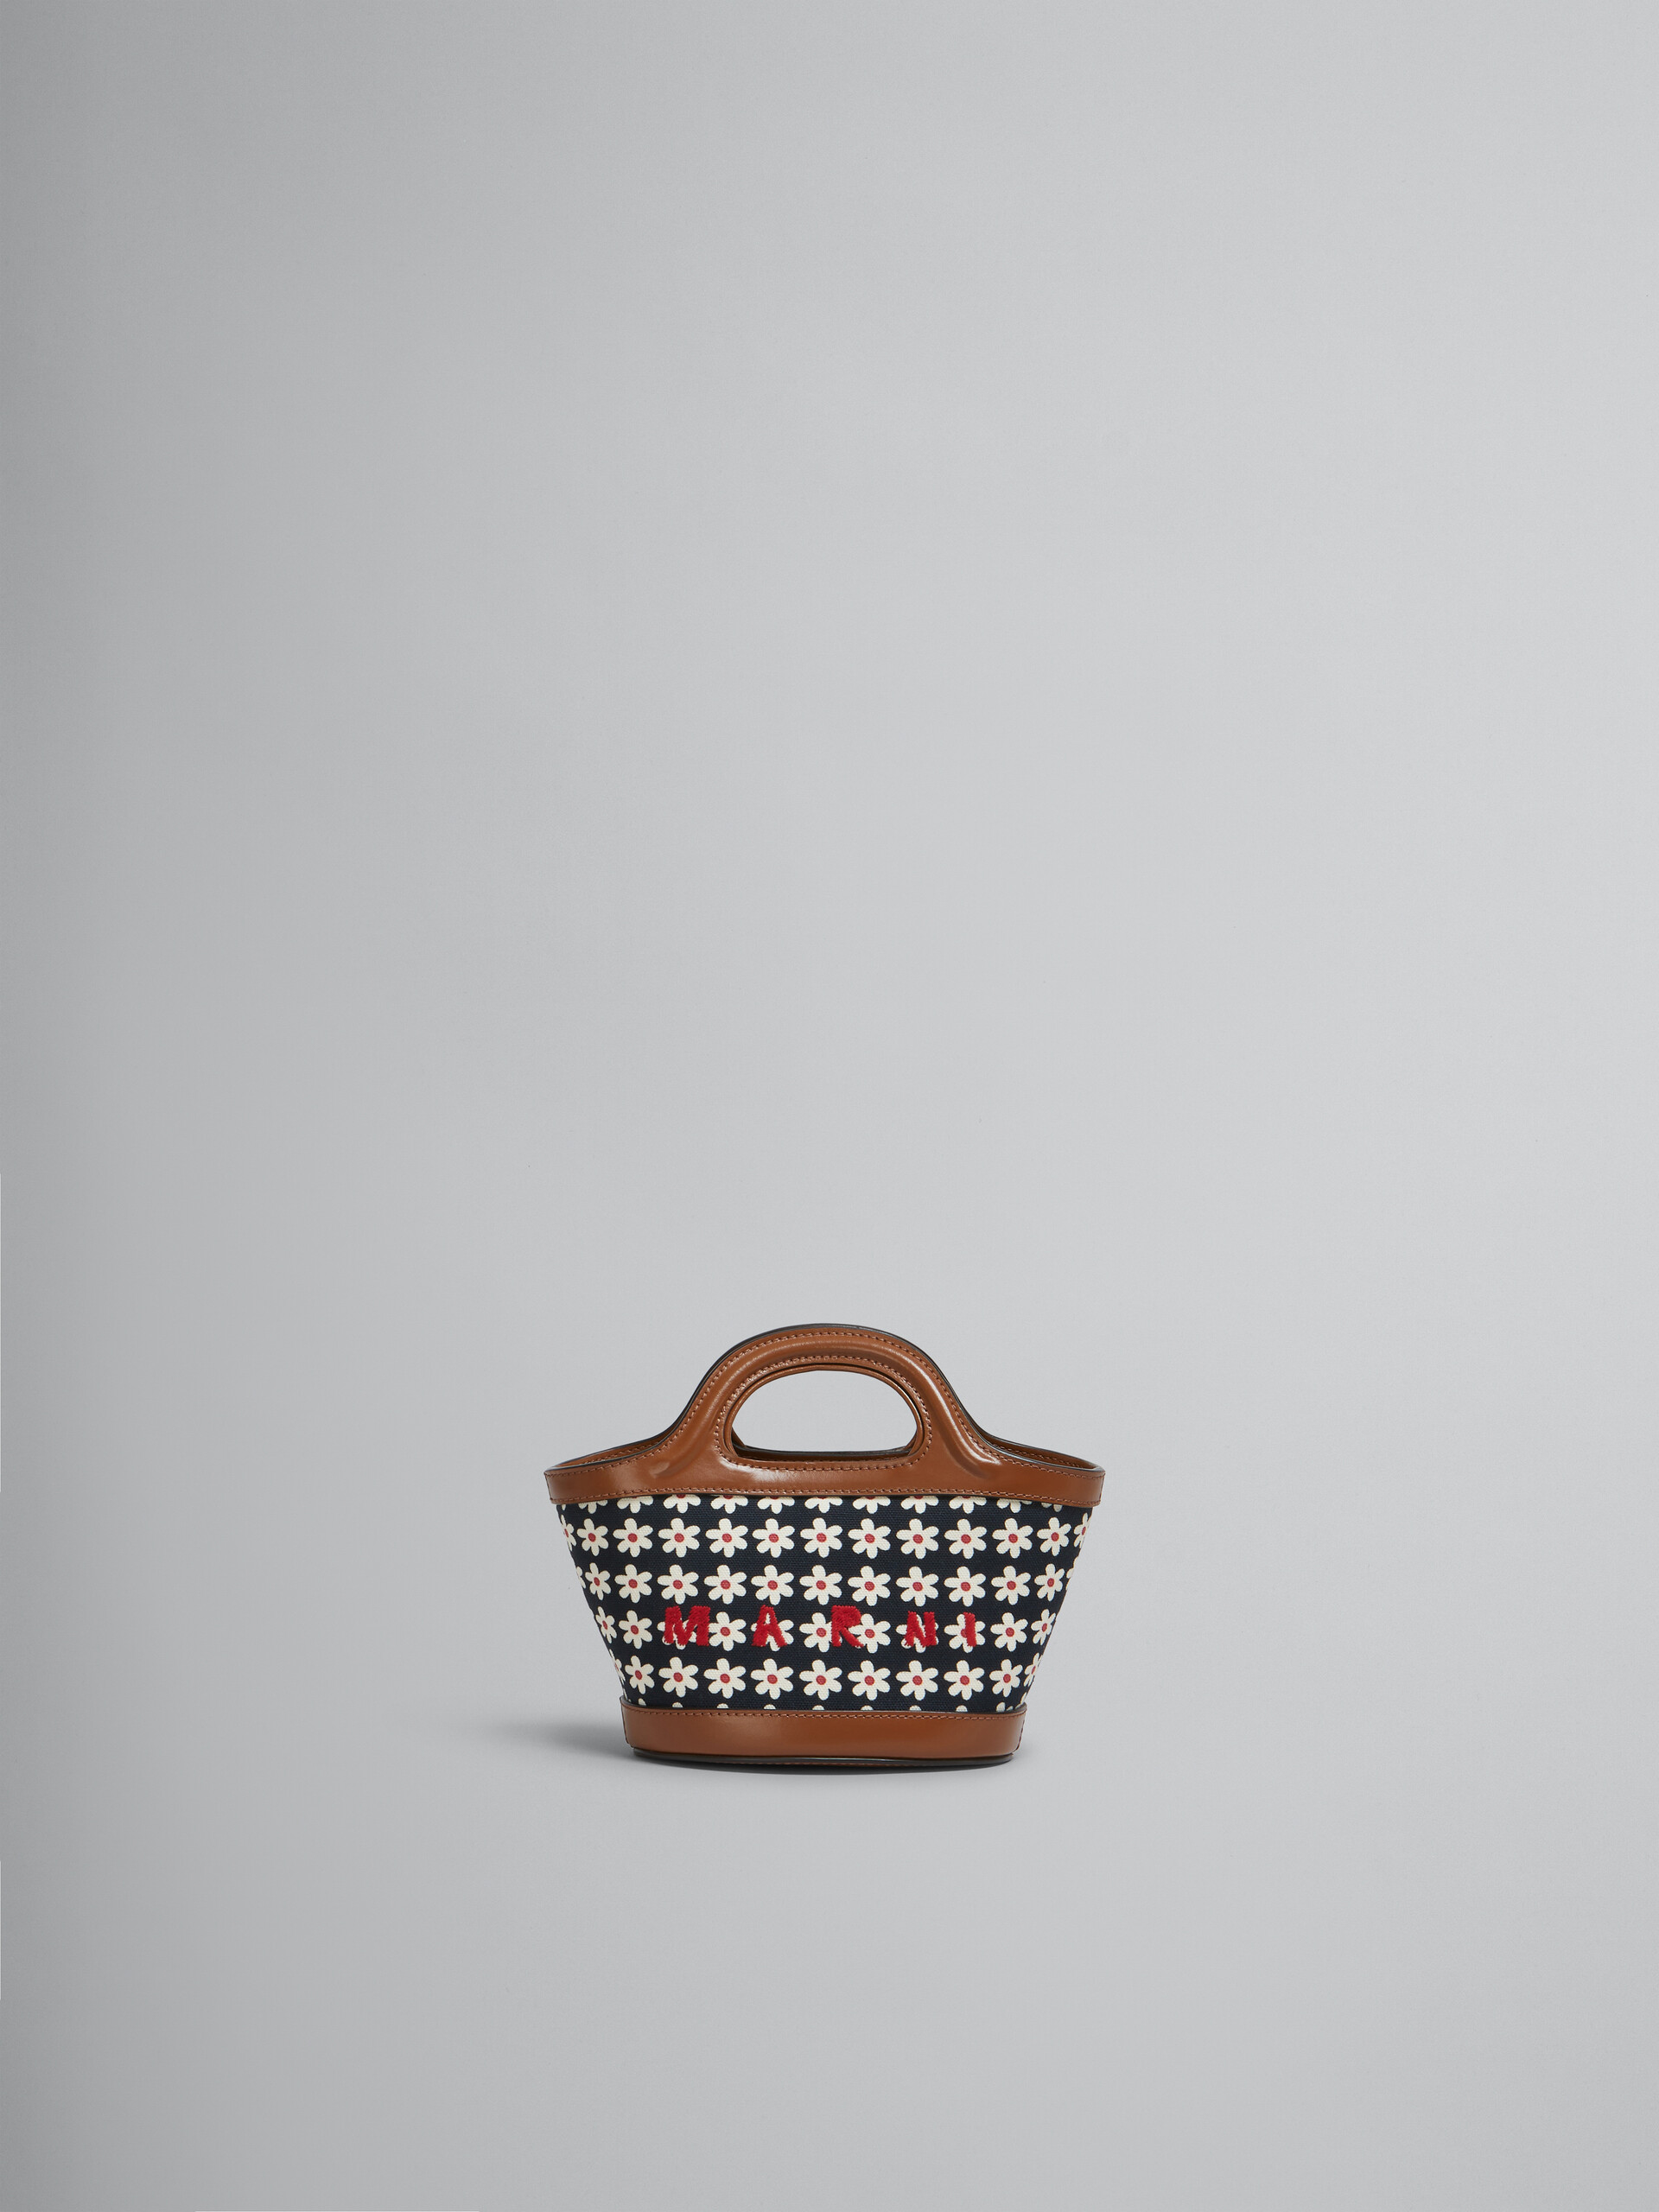 Black canvas Tropicalia Micro Bag with daisy print - Handbag - Image 1